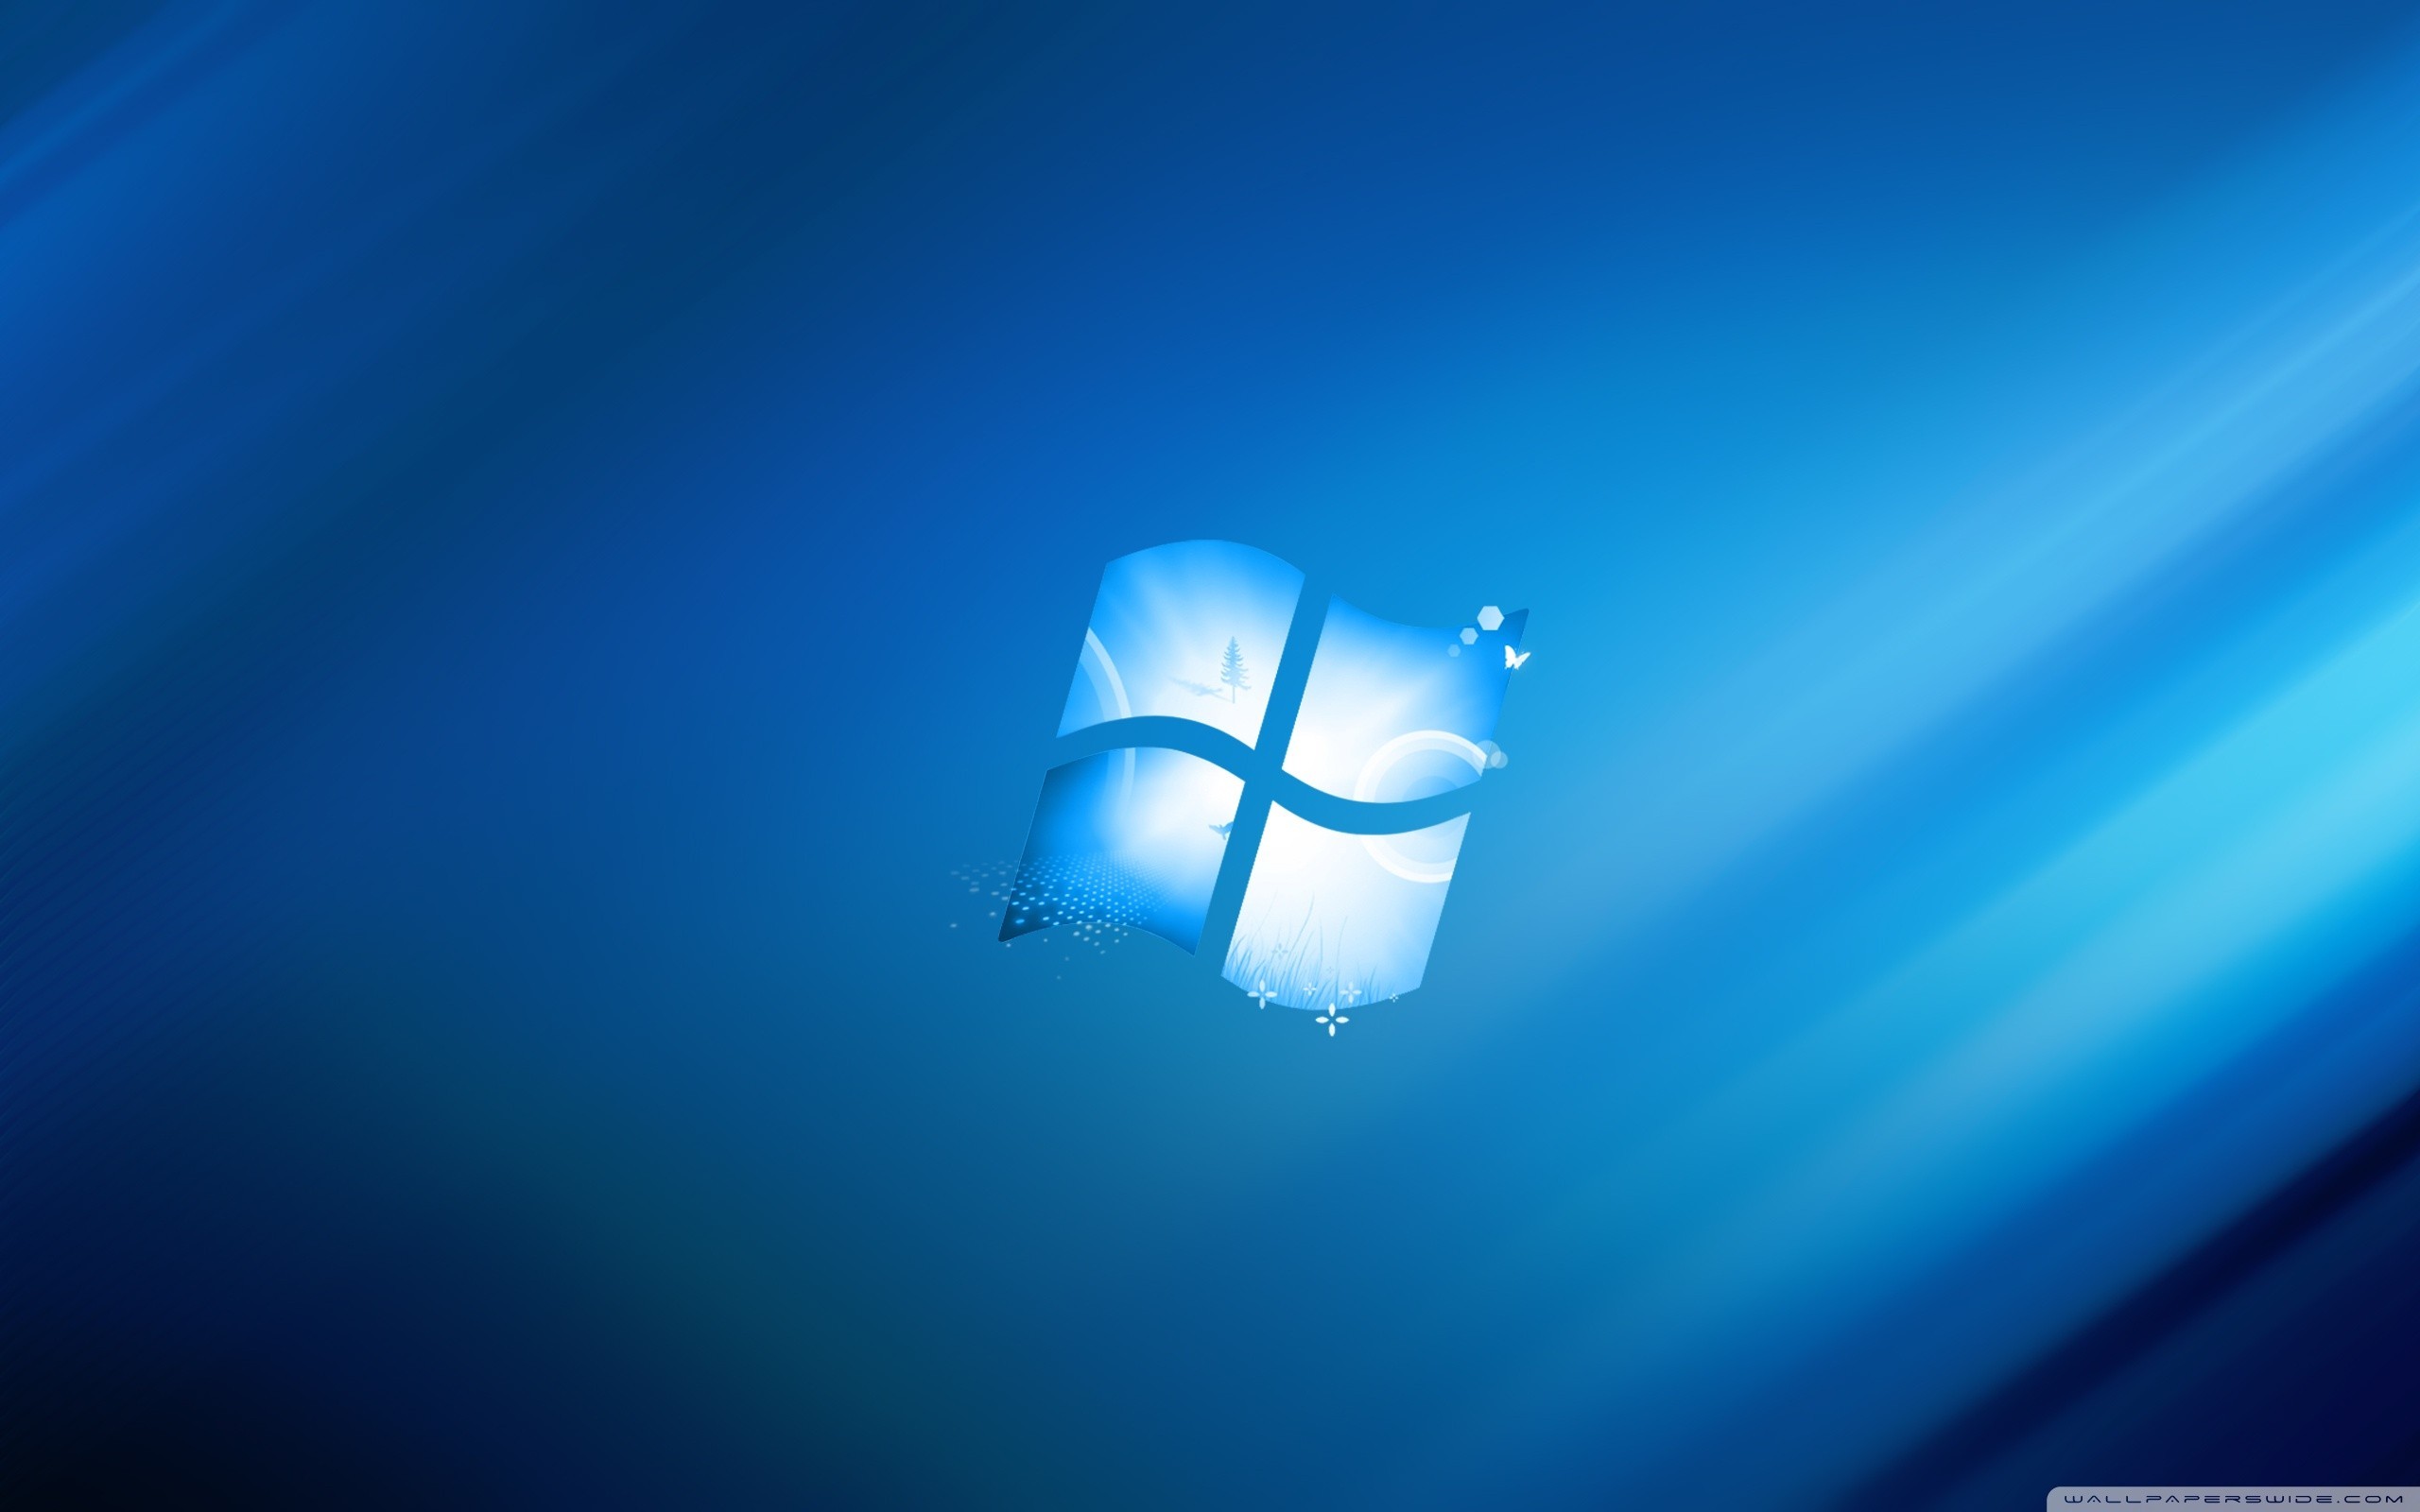 windows de escritorio fondos de pantalla hd,azul,sistema operativo,cielo,ligero,atmósfera